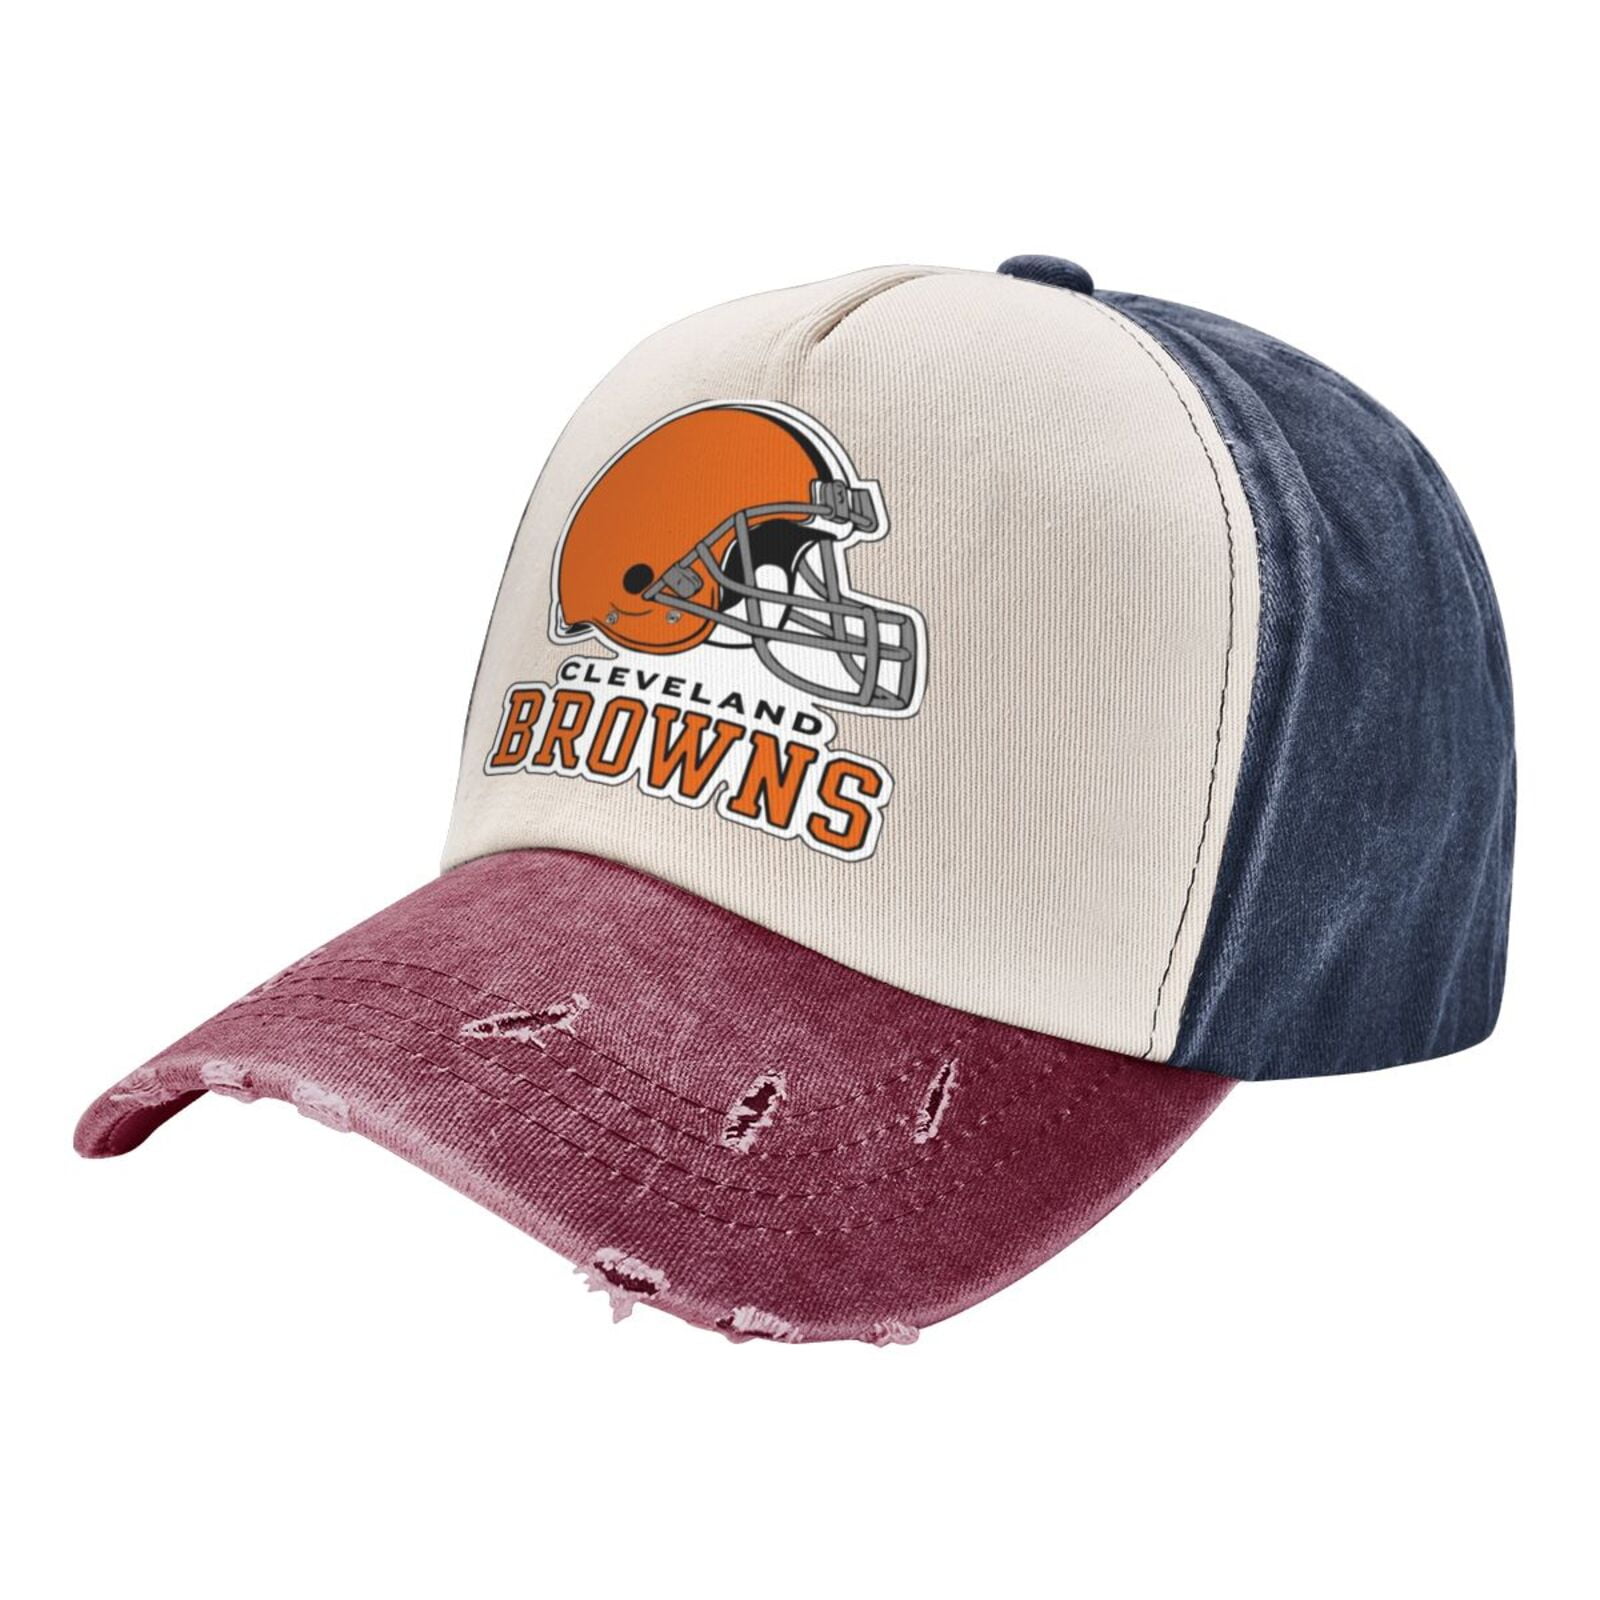 Cleveland-Browns Baseball Cap Adjustable Hat Sun Shade Peaked Cap ...